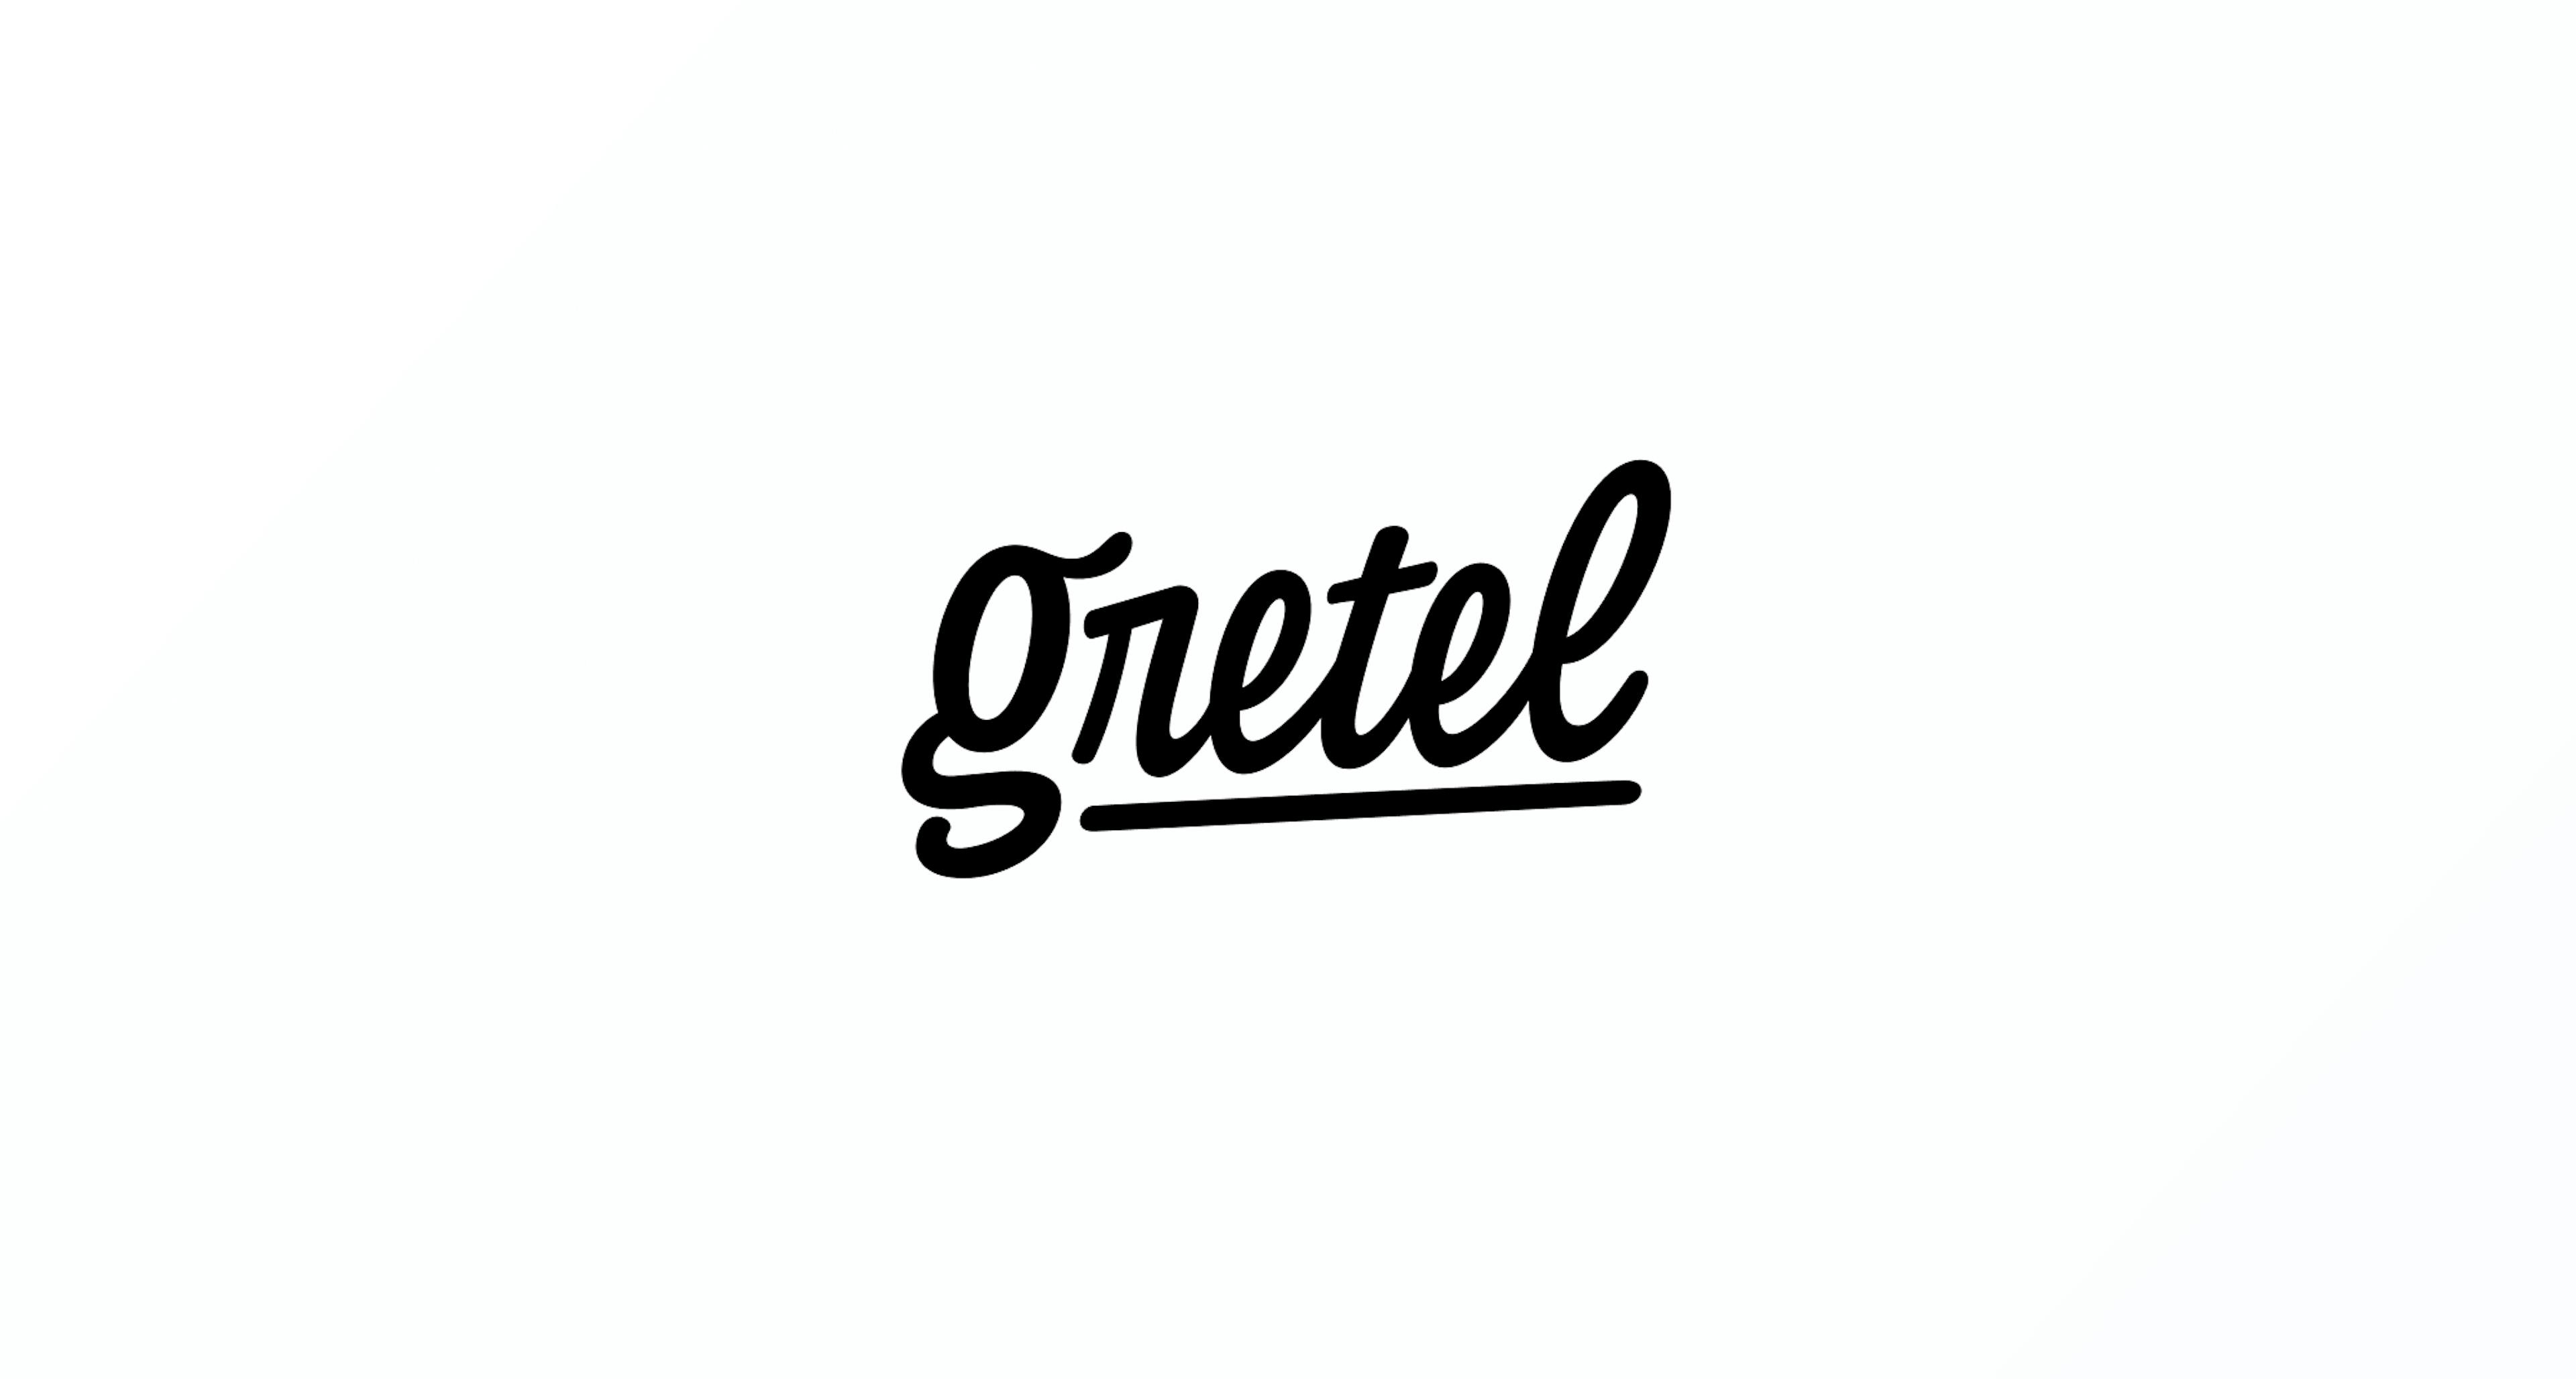 Gretel wordmark